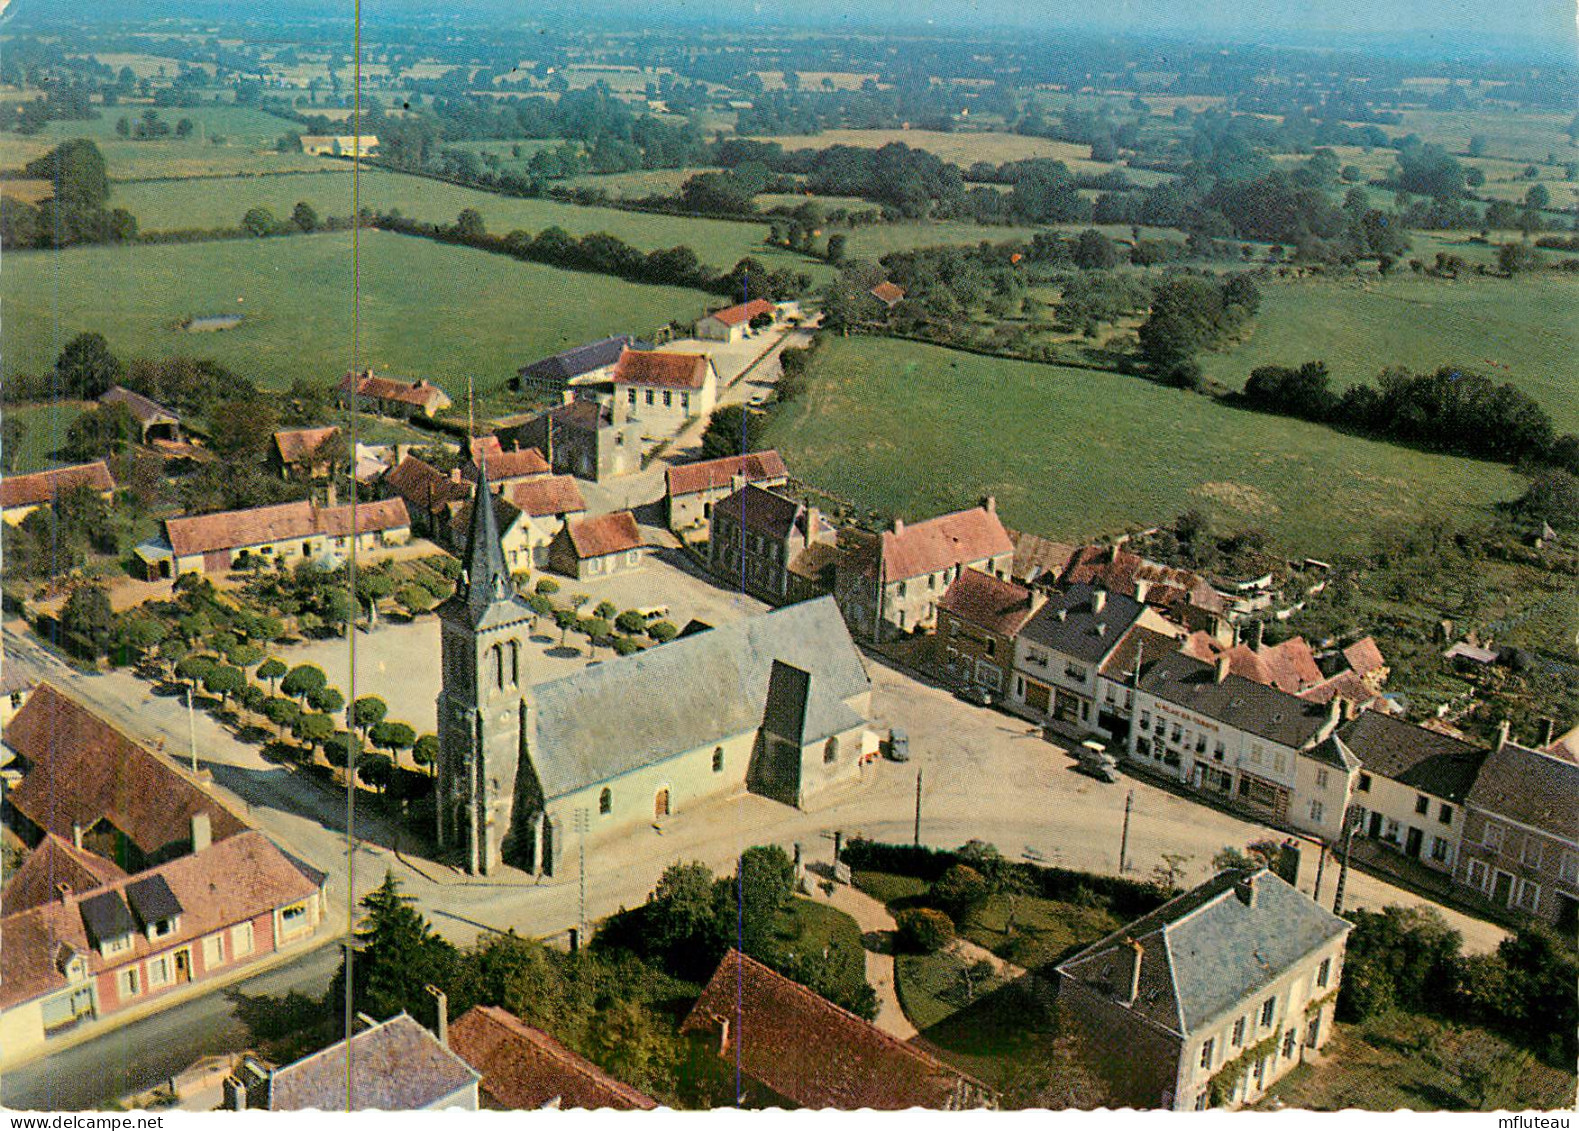 72* LA FRESNAYE  Place De L  Eglise  (CPSM 10x15cm)     RL18,1040 - La Fresnaye Sur Chédouet